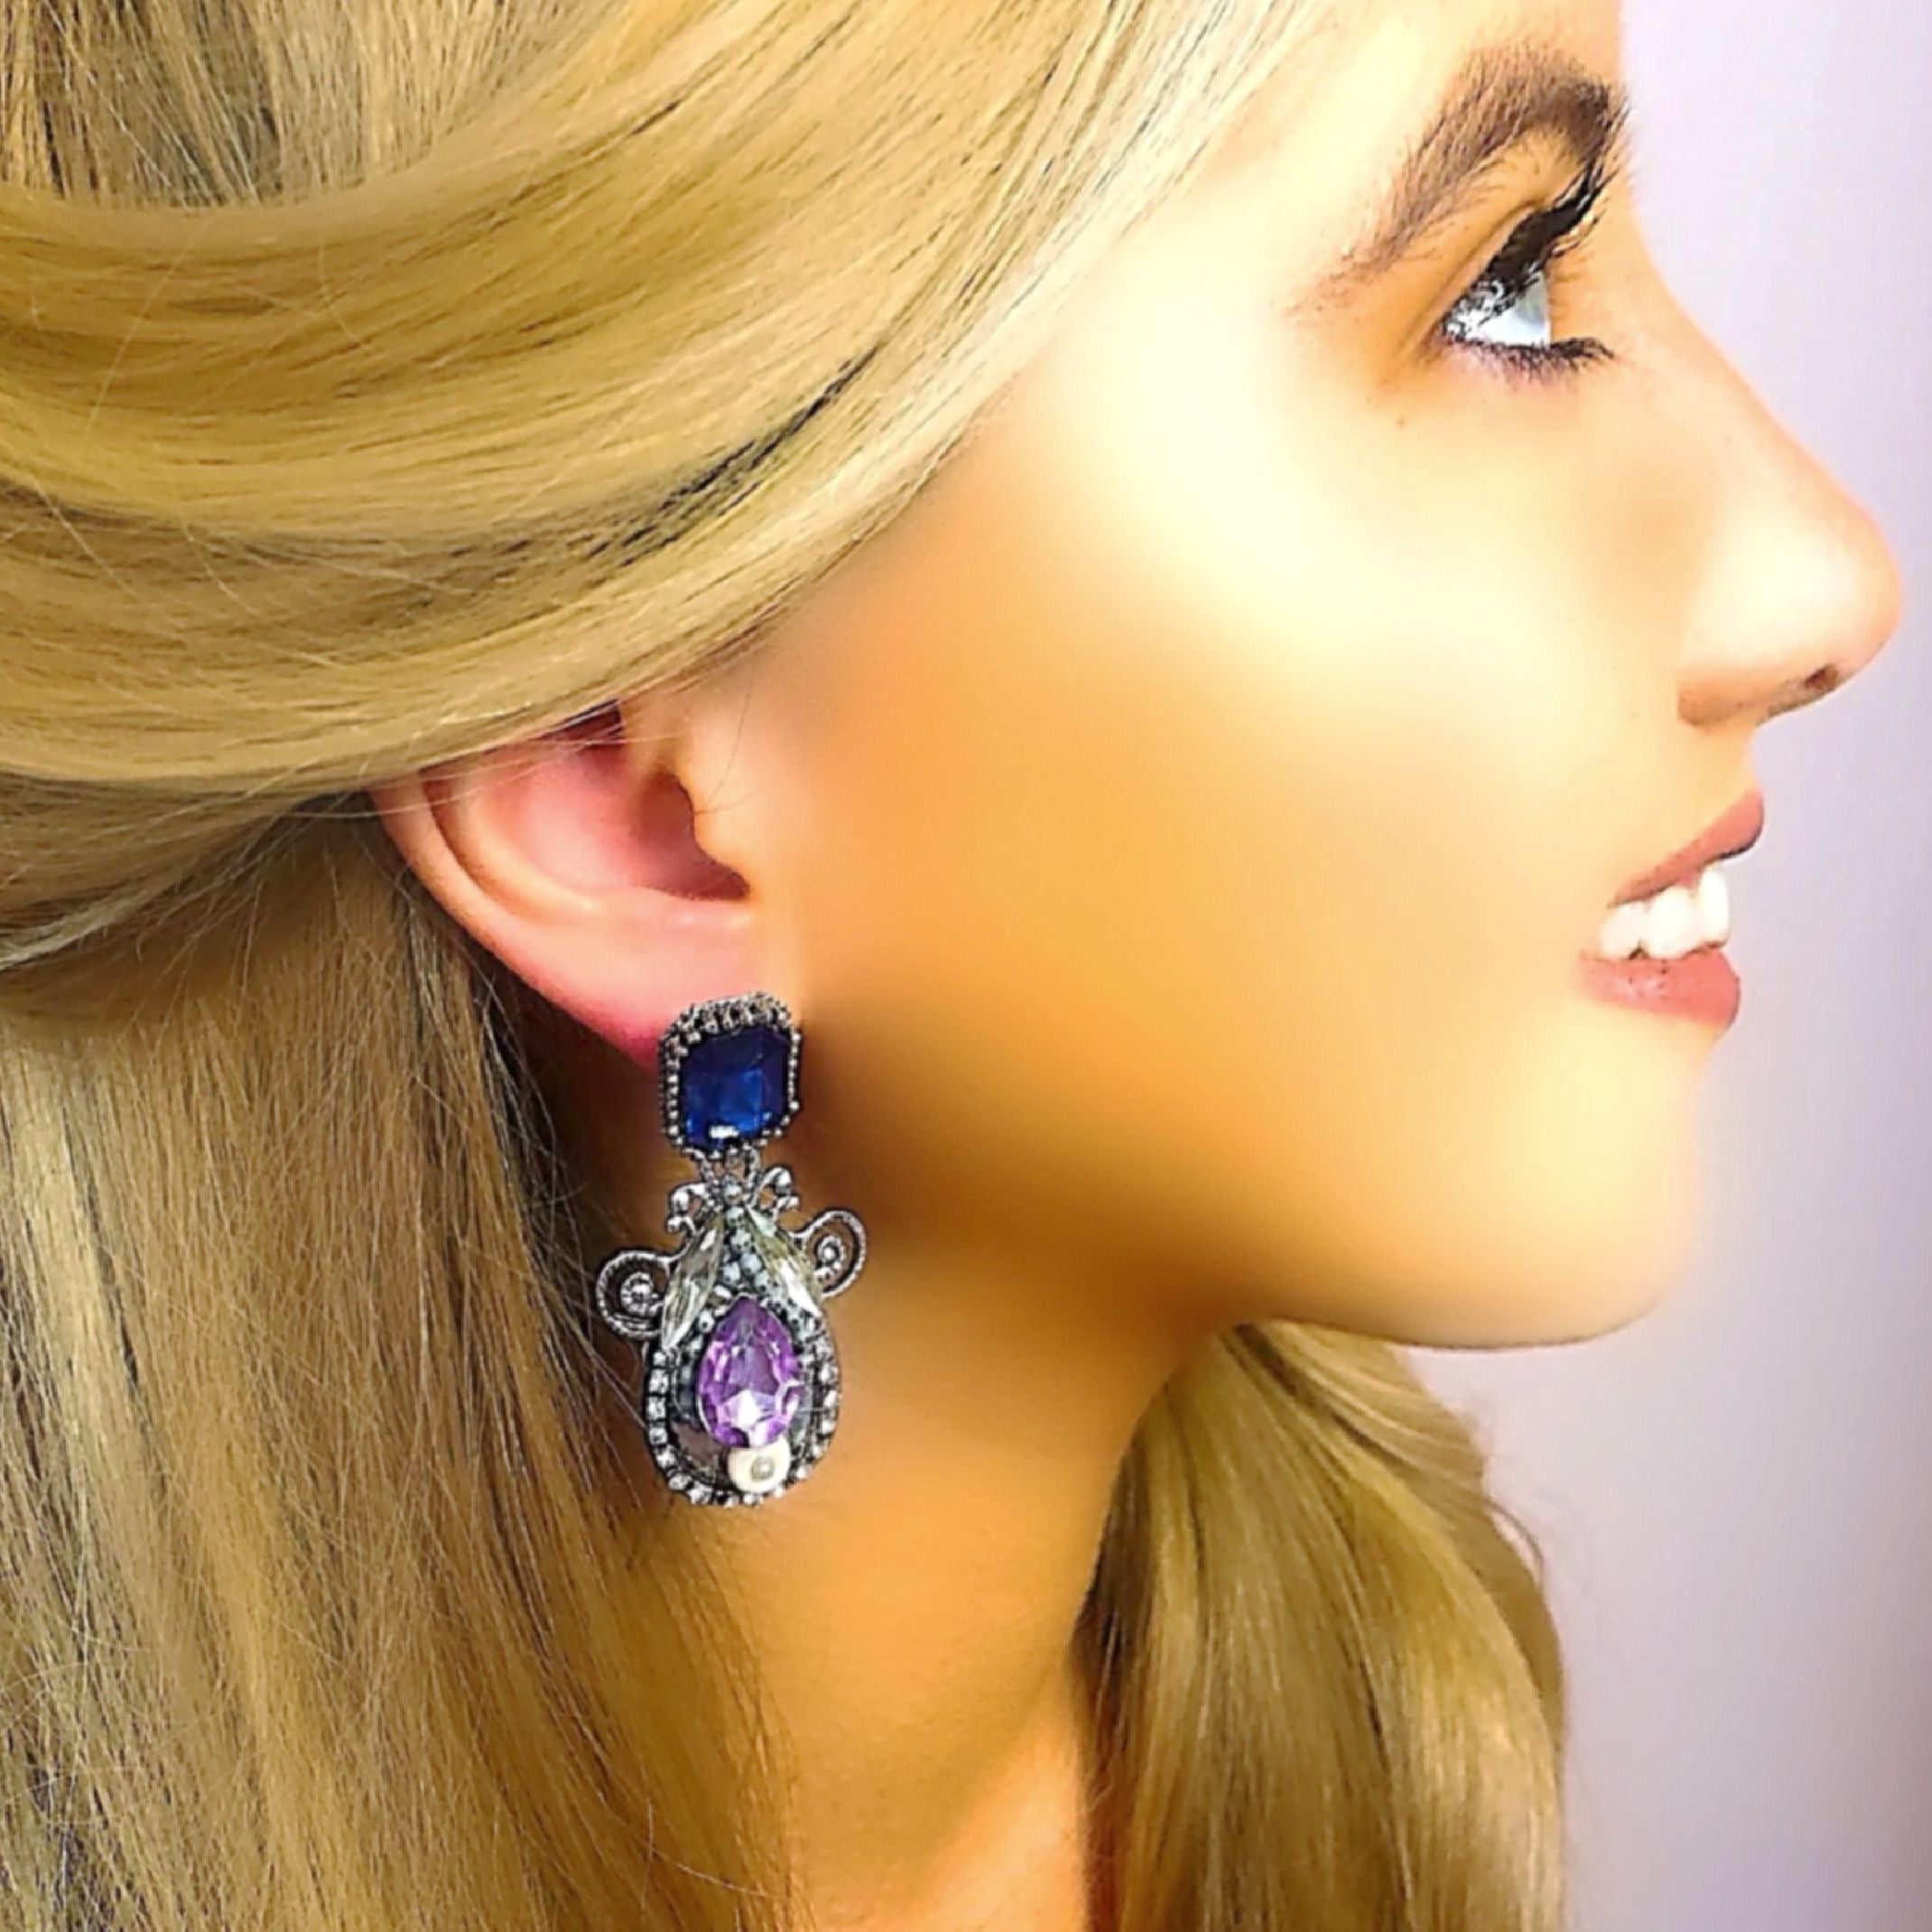 Navy and purple jewel earrings 